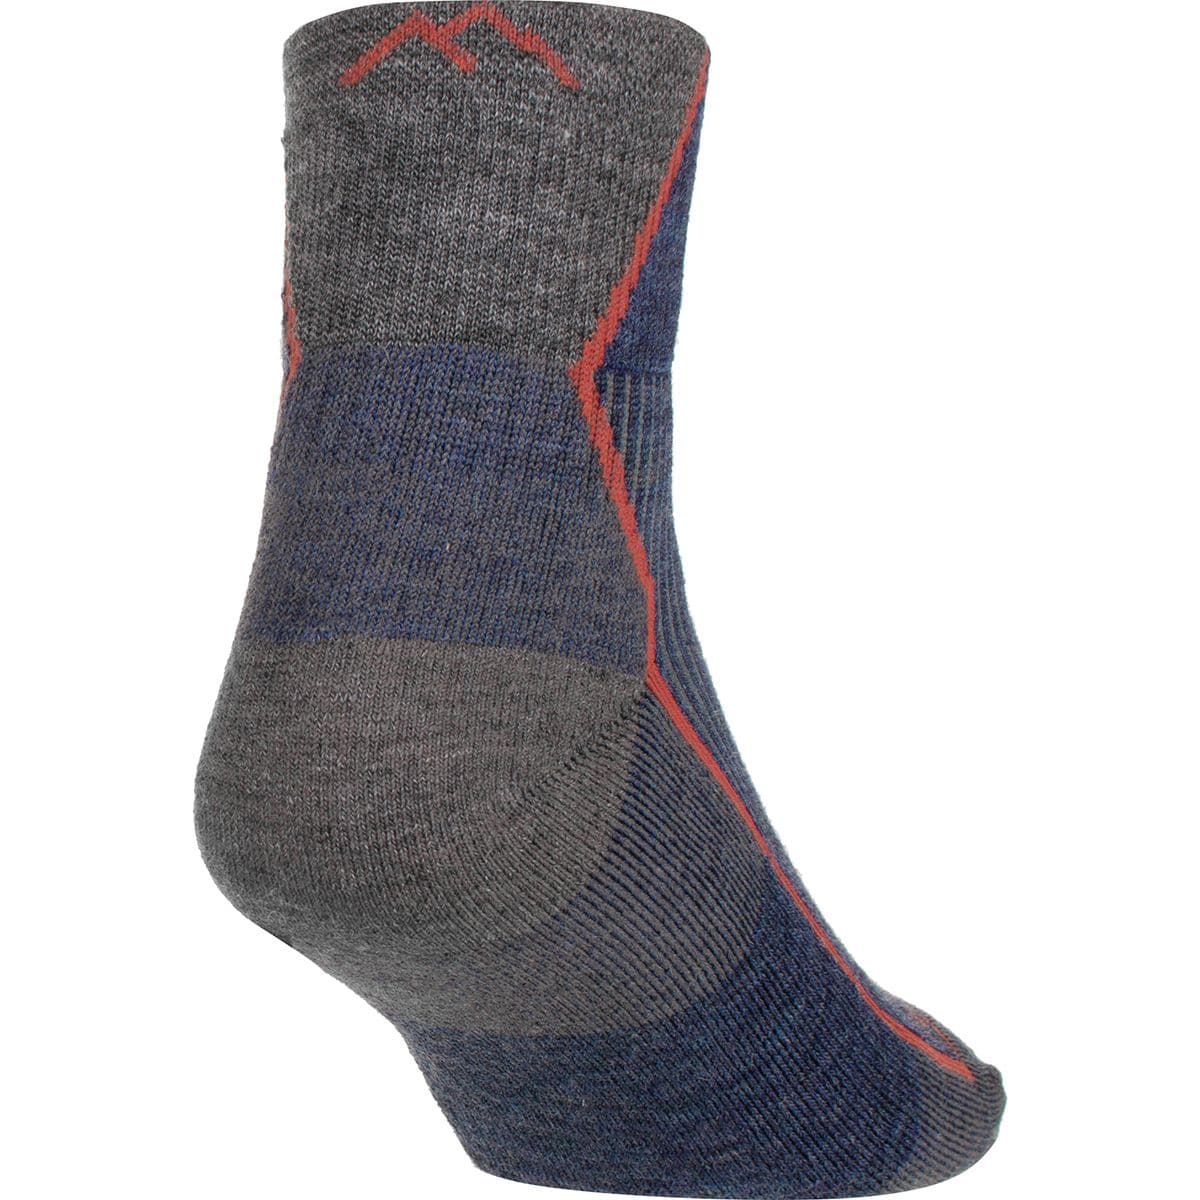 Darn Tough Hiker 1/4 Cushion Sock - Men's - Accessories